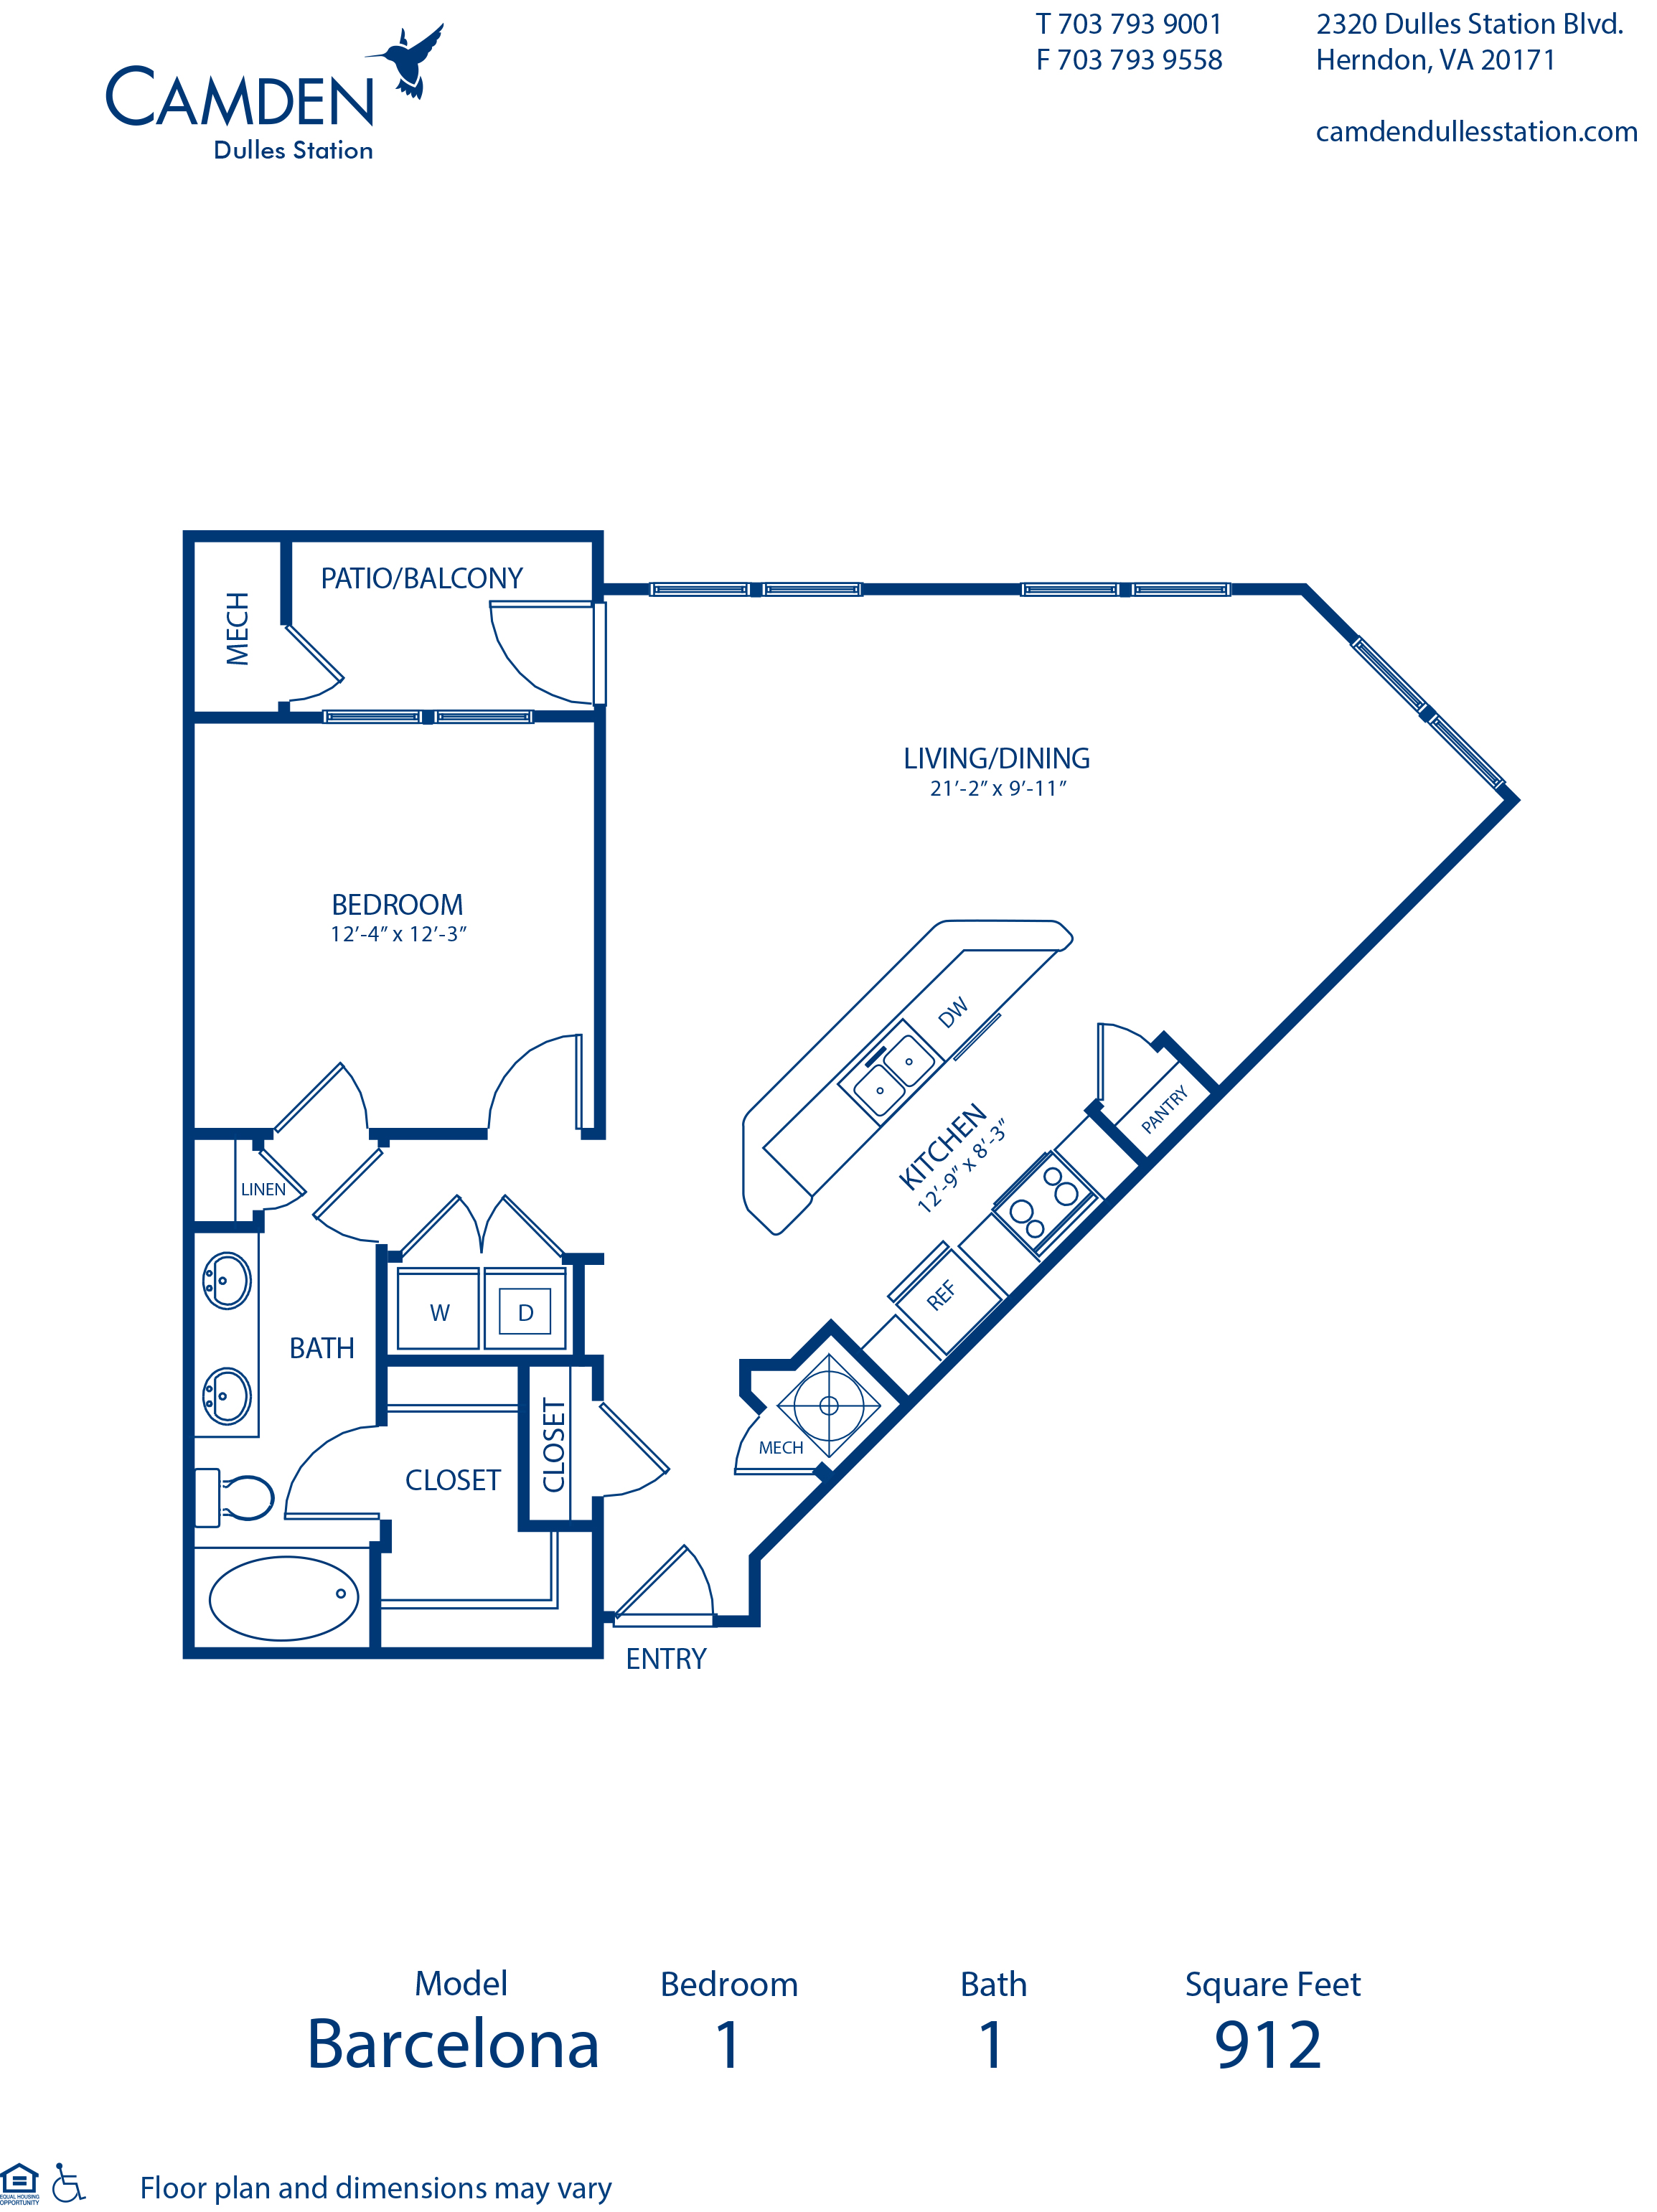 1, 2 & 3 Bedroom Apartments in Herndon, VA - Camden Dulles Station